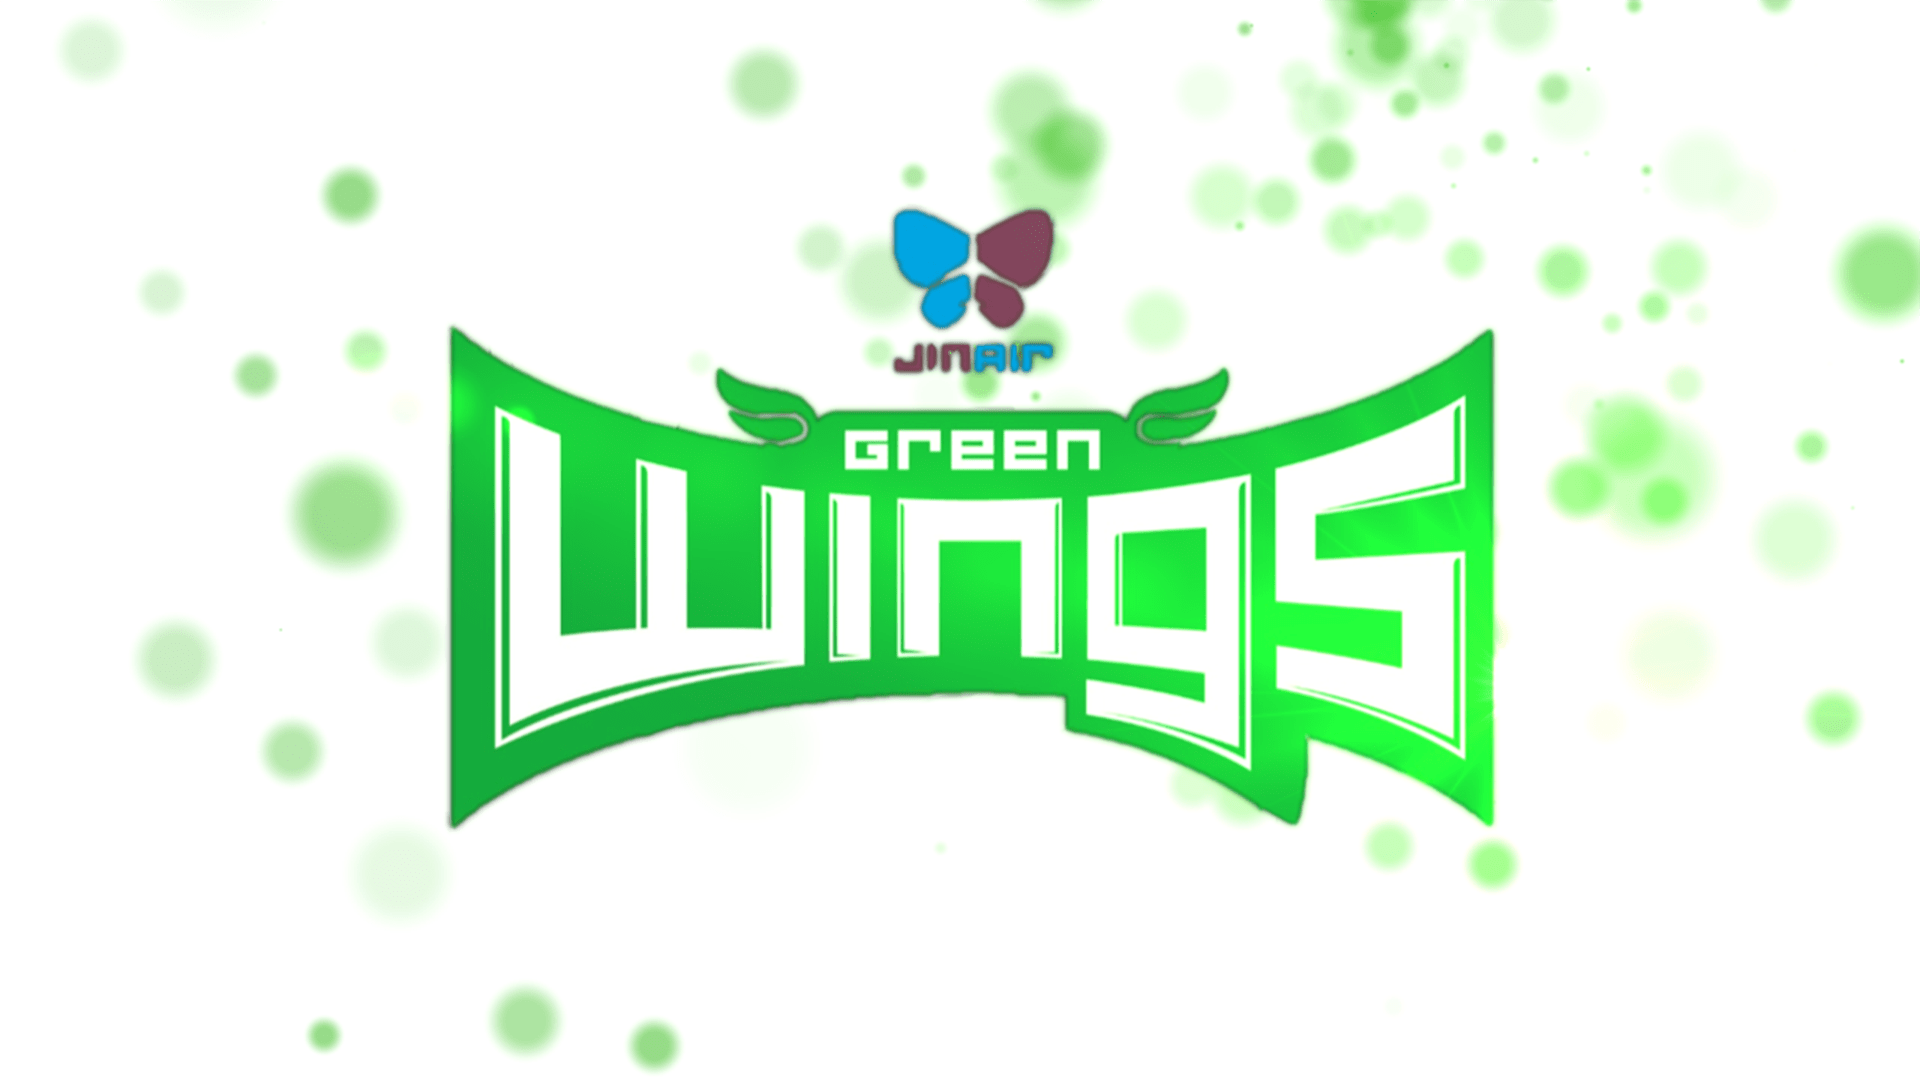 StarCraft II made in South Korea - Jin Air Green Wings